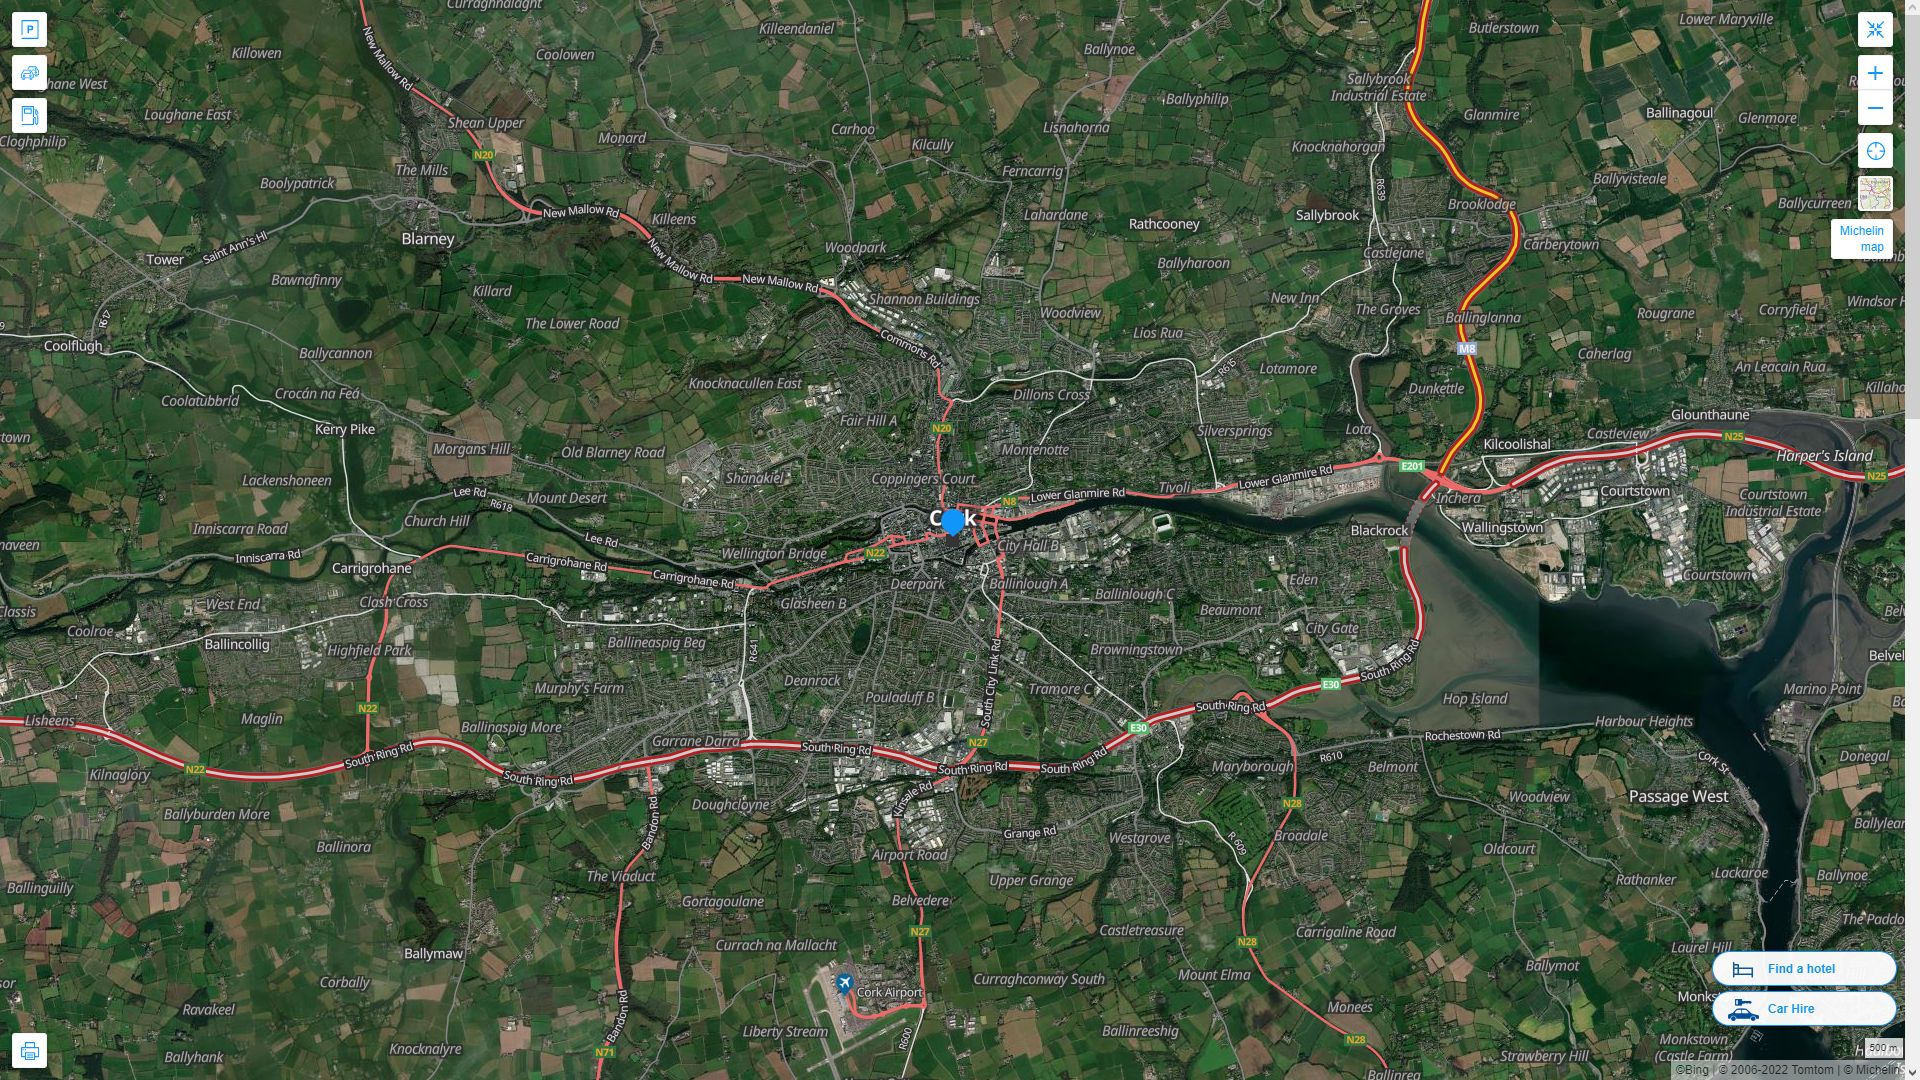 Cork Irlande Autoroute et carte routiere avec vue satellite